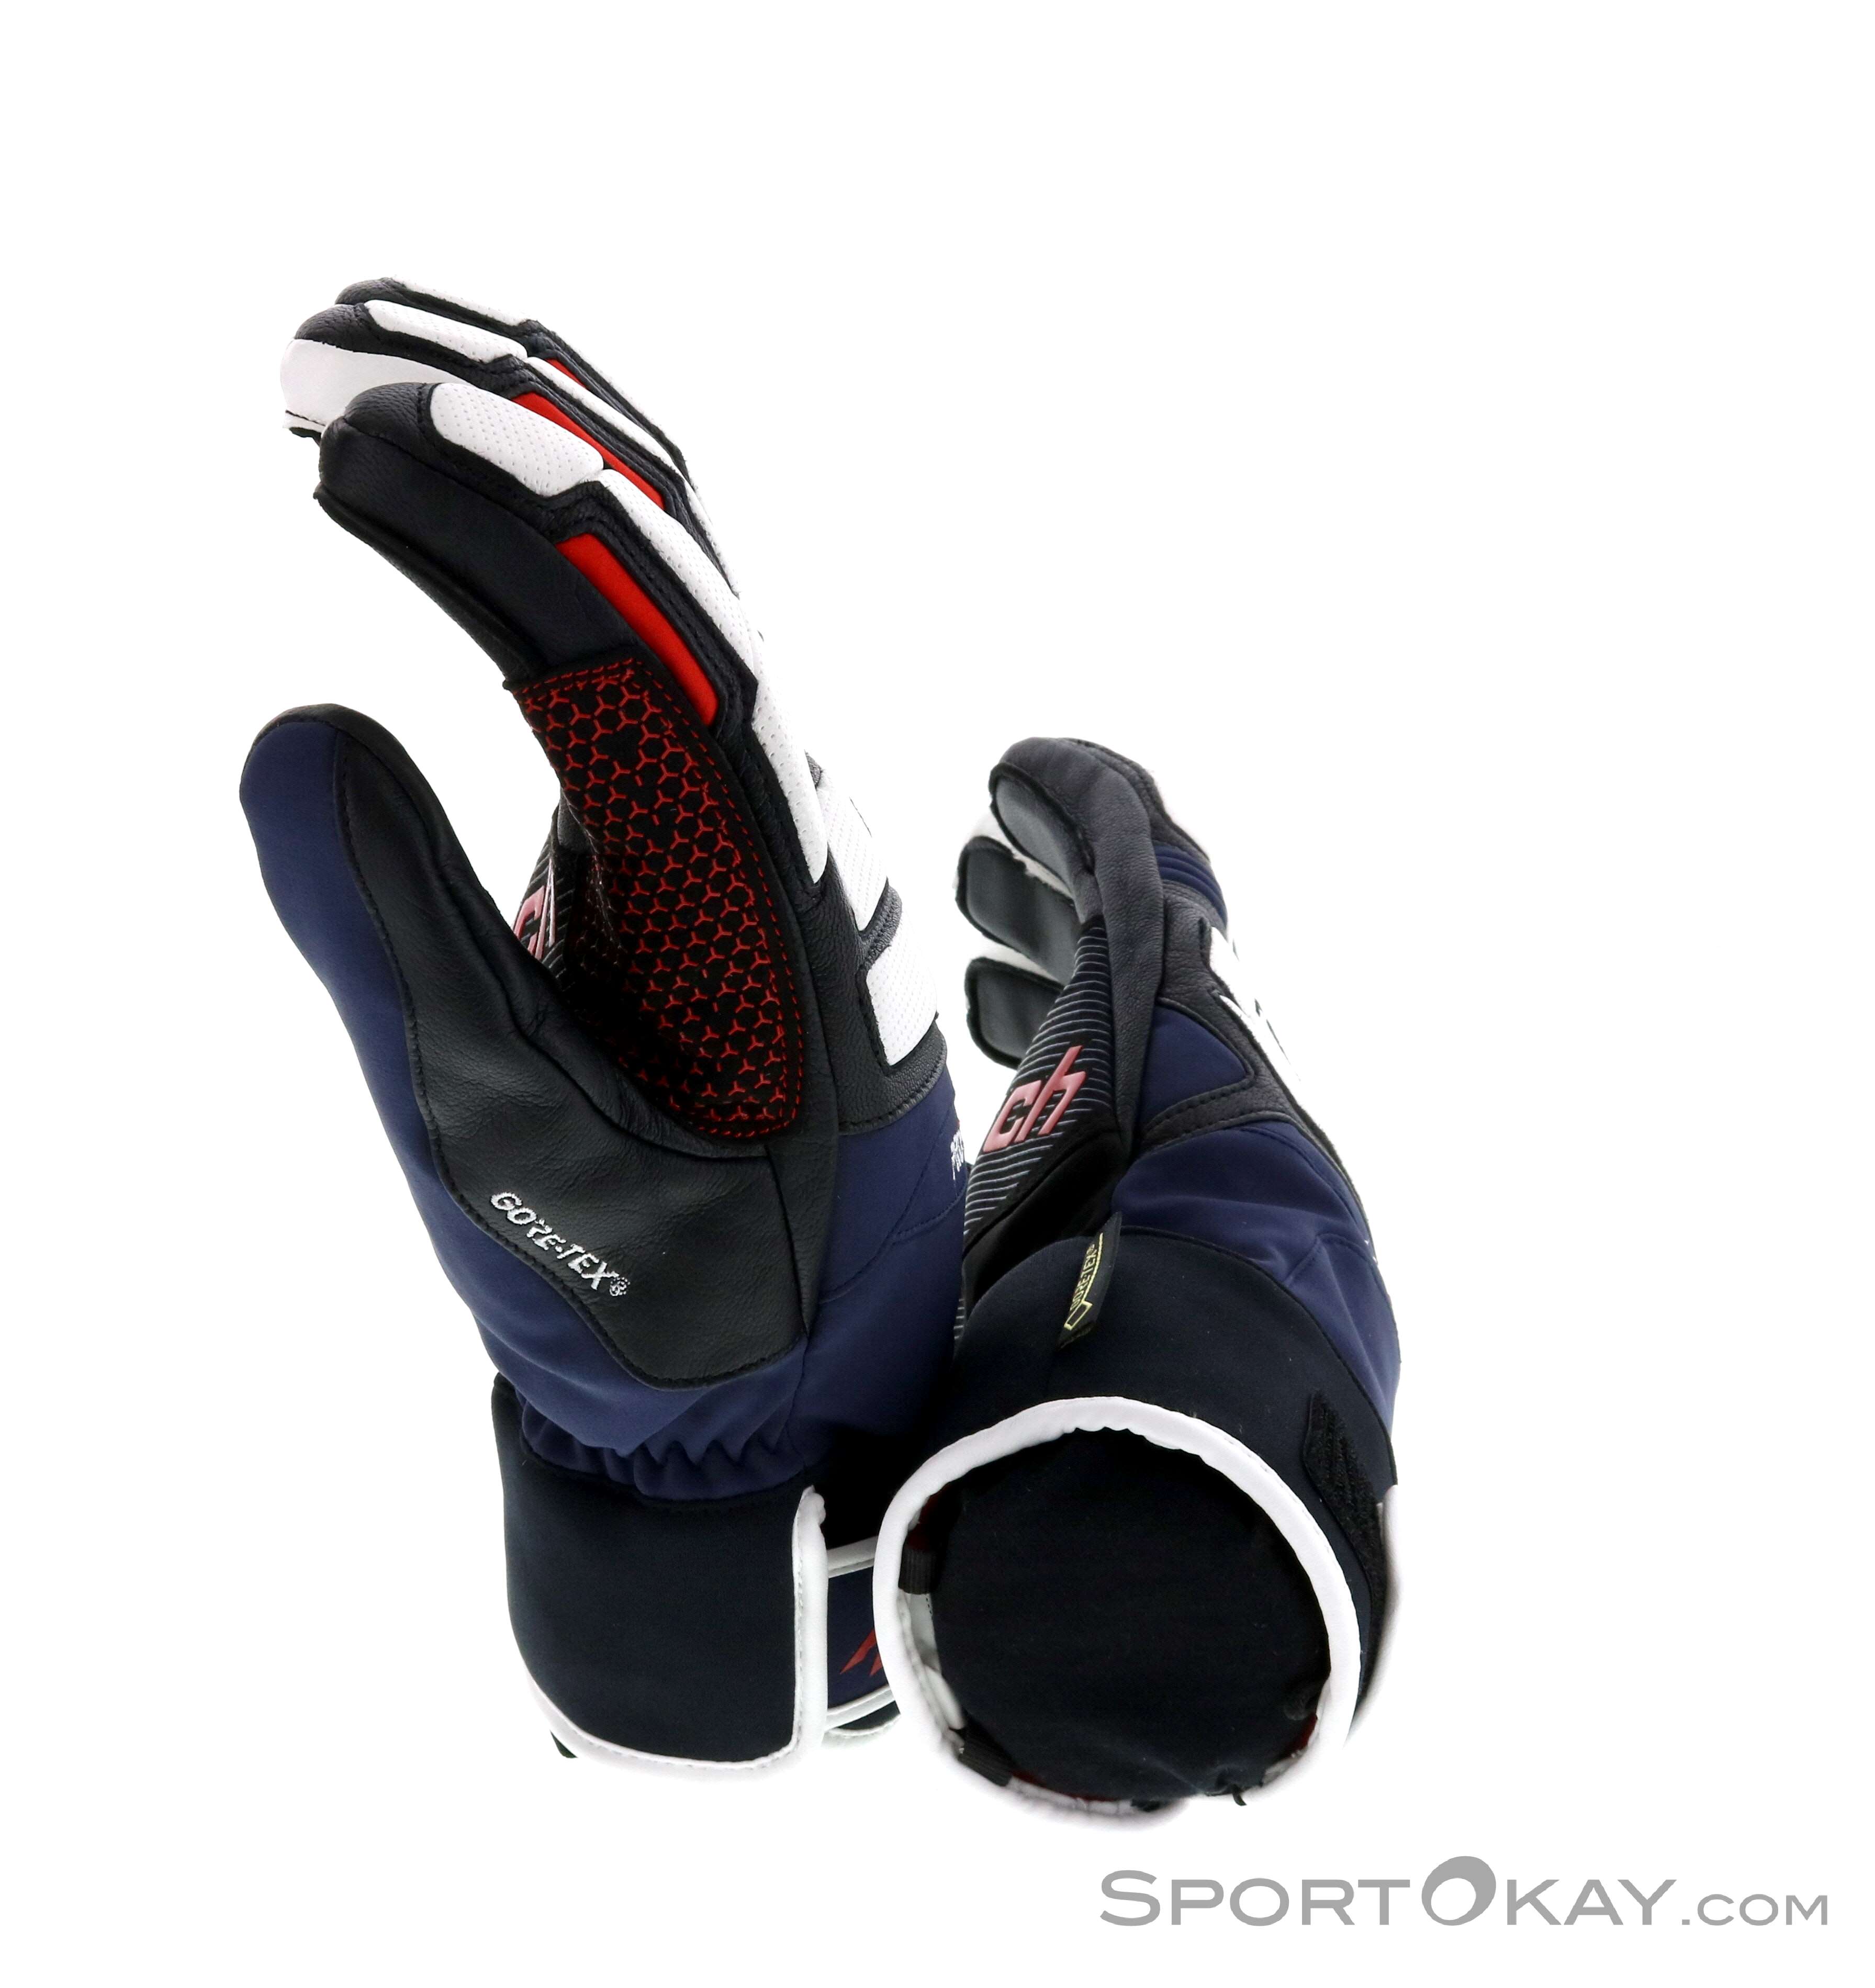 Gore + Skibekleidung Reusch - Handschuhe Alle - Pinturault - GTX - Ski&Freeride Gore-Tex Skihandschuhe Grip Alexis